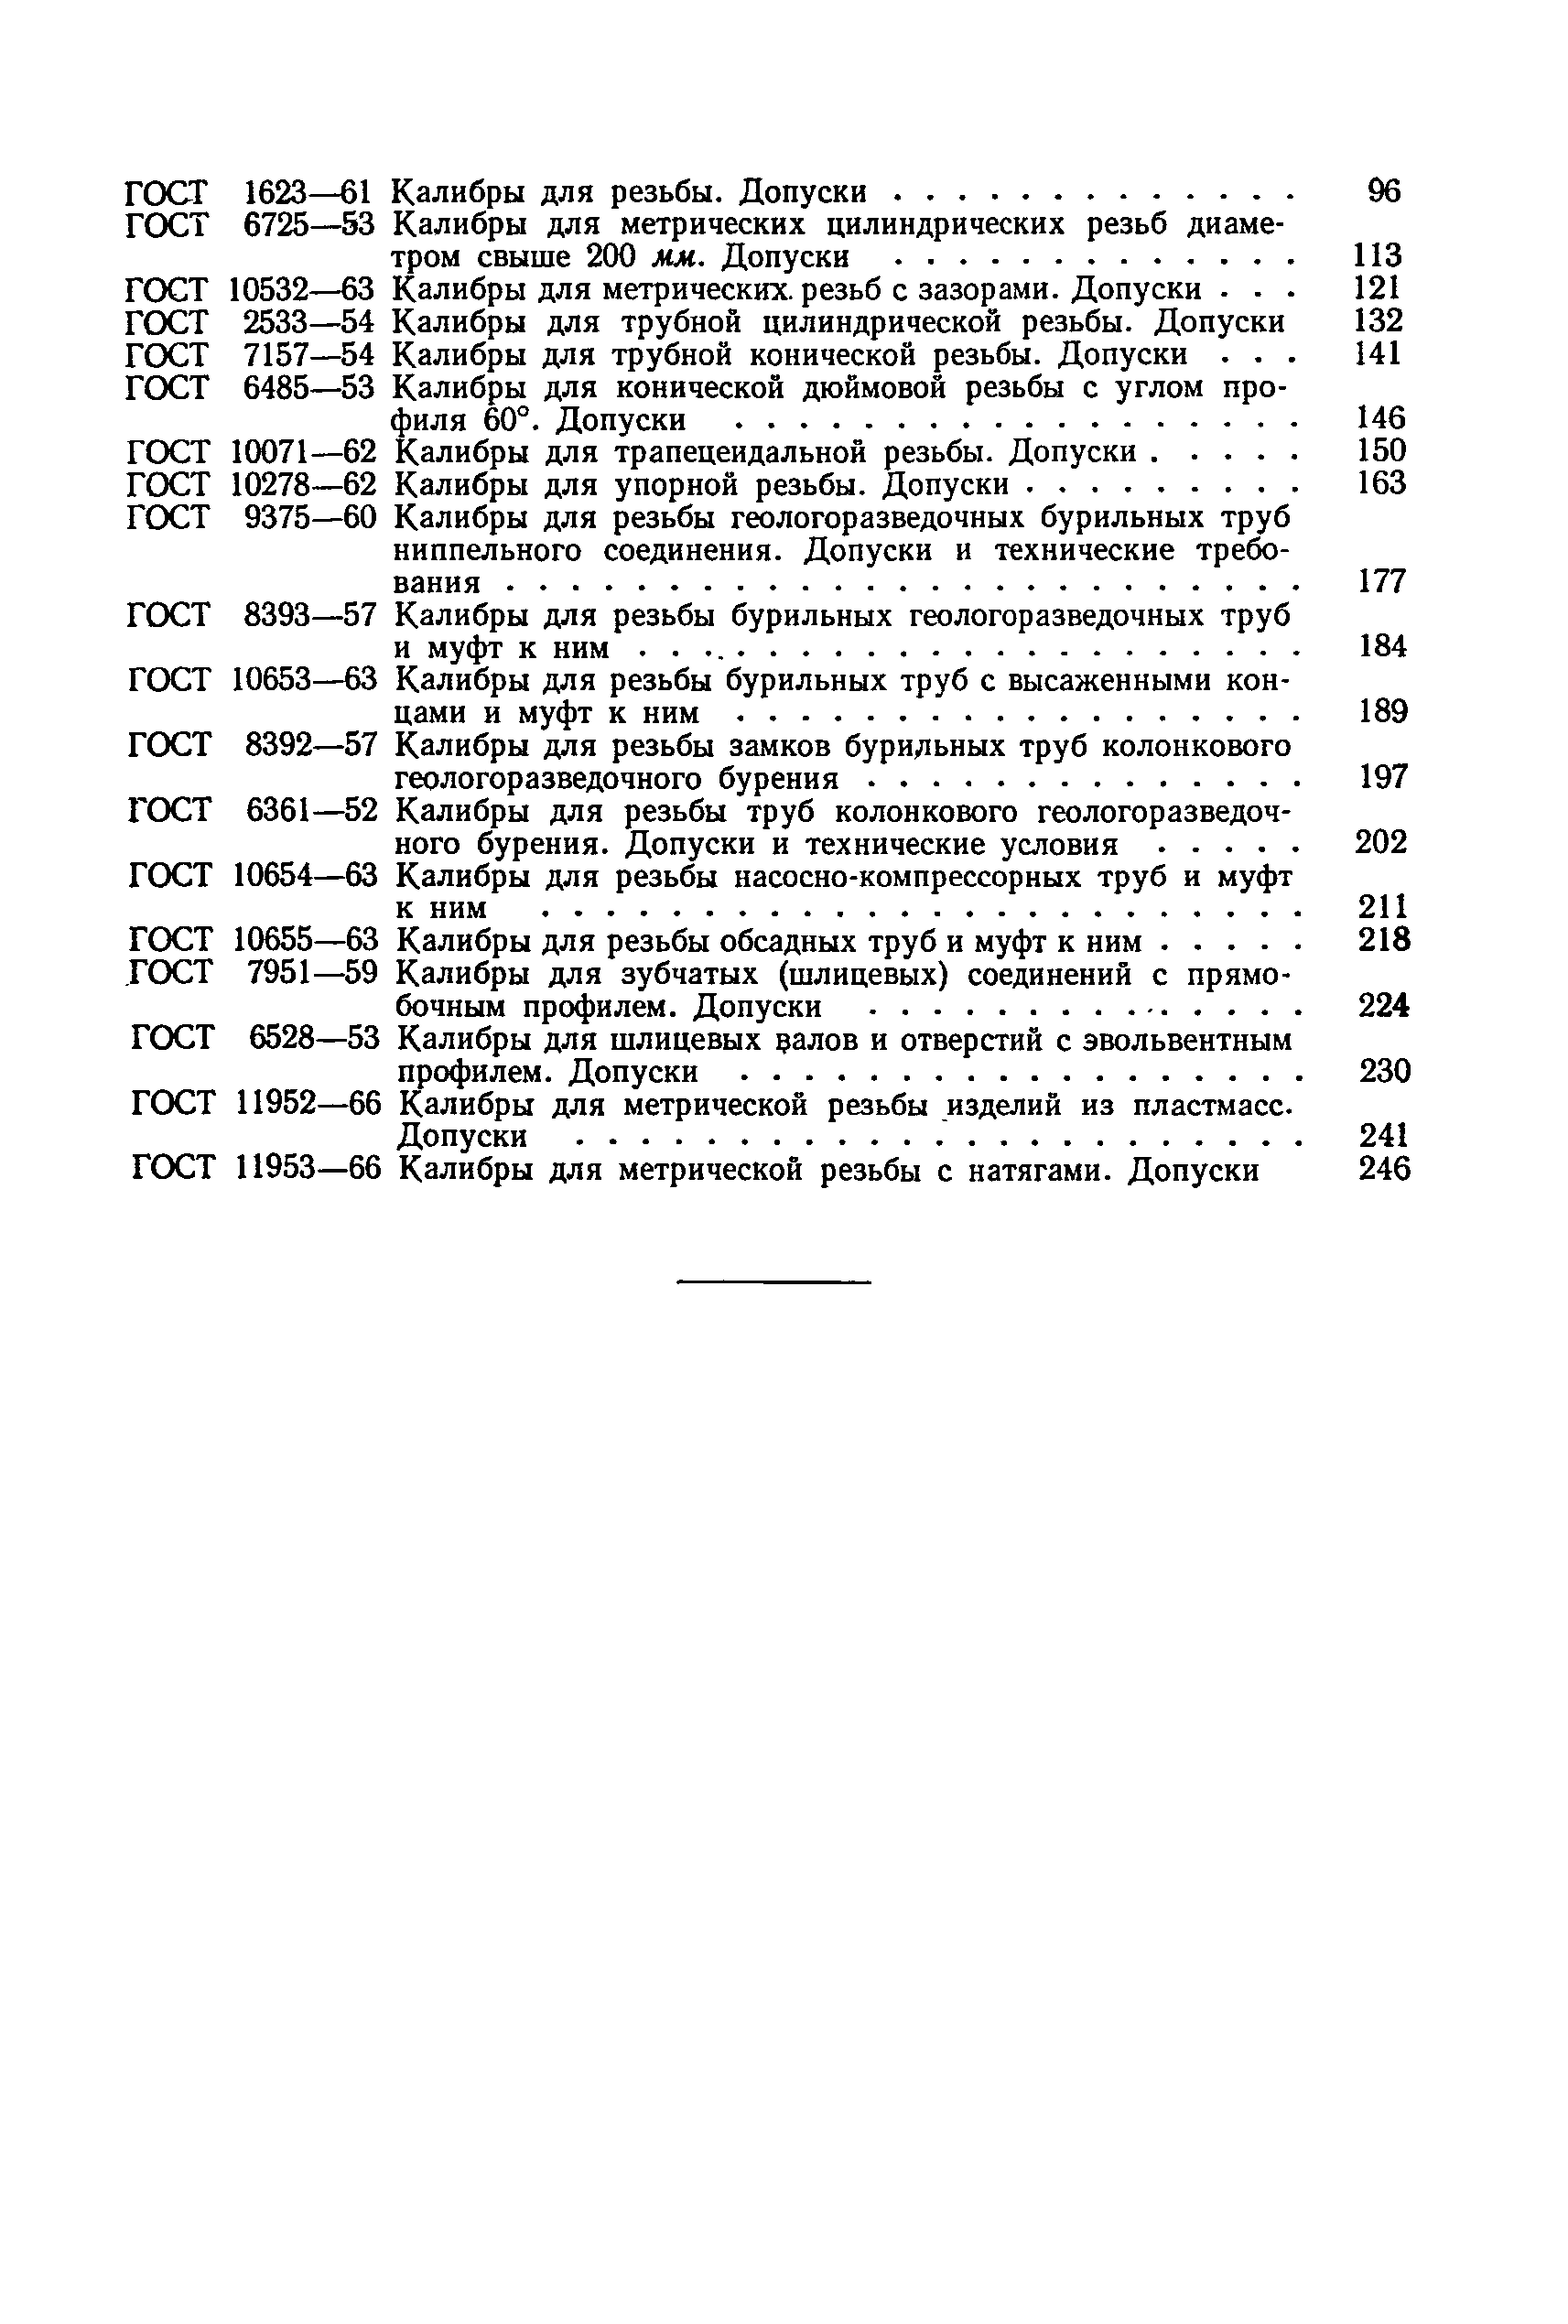 ГОСТ 11953-66